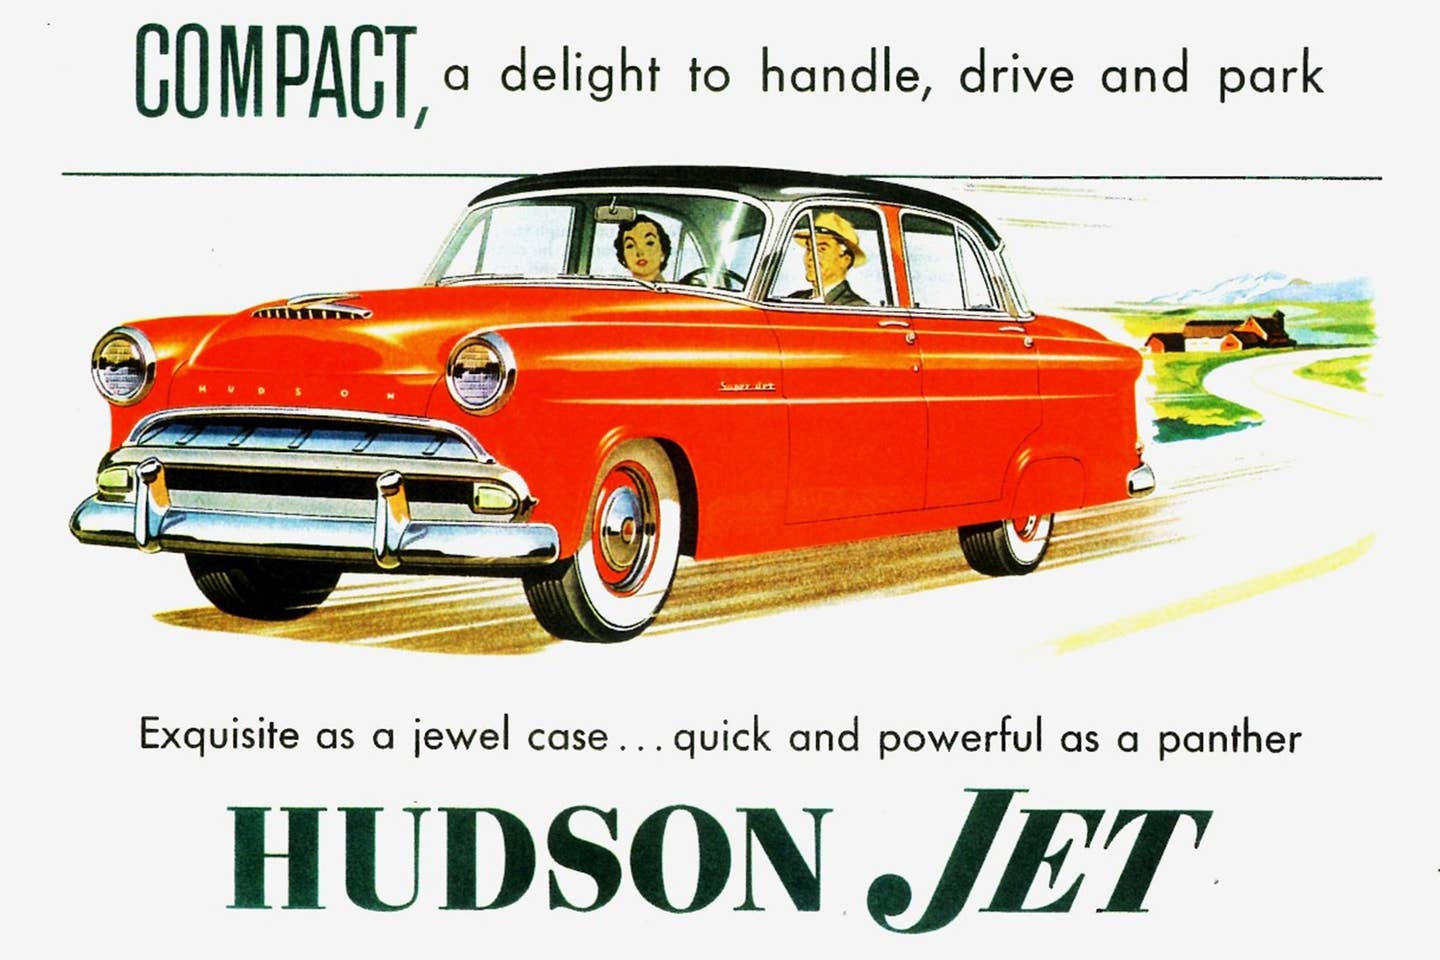 The Hudson Jet